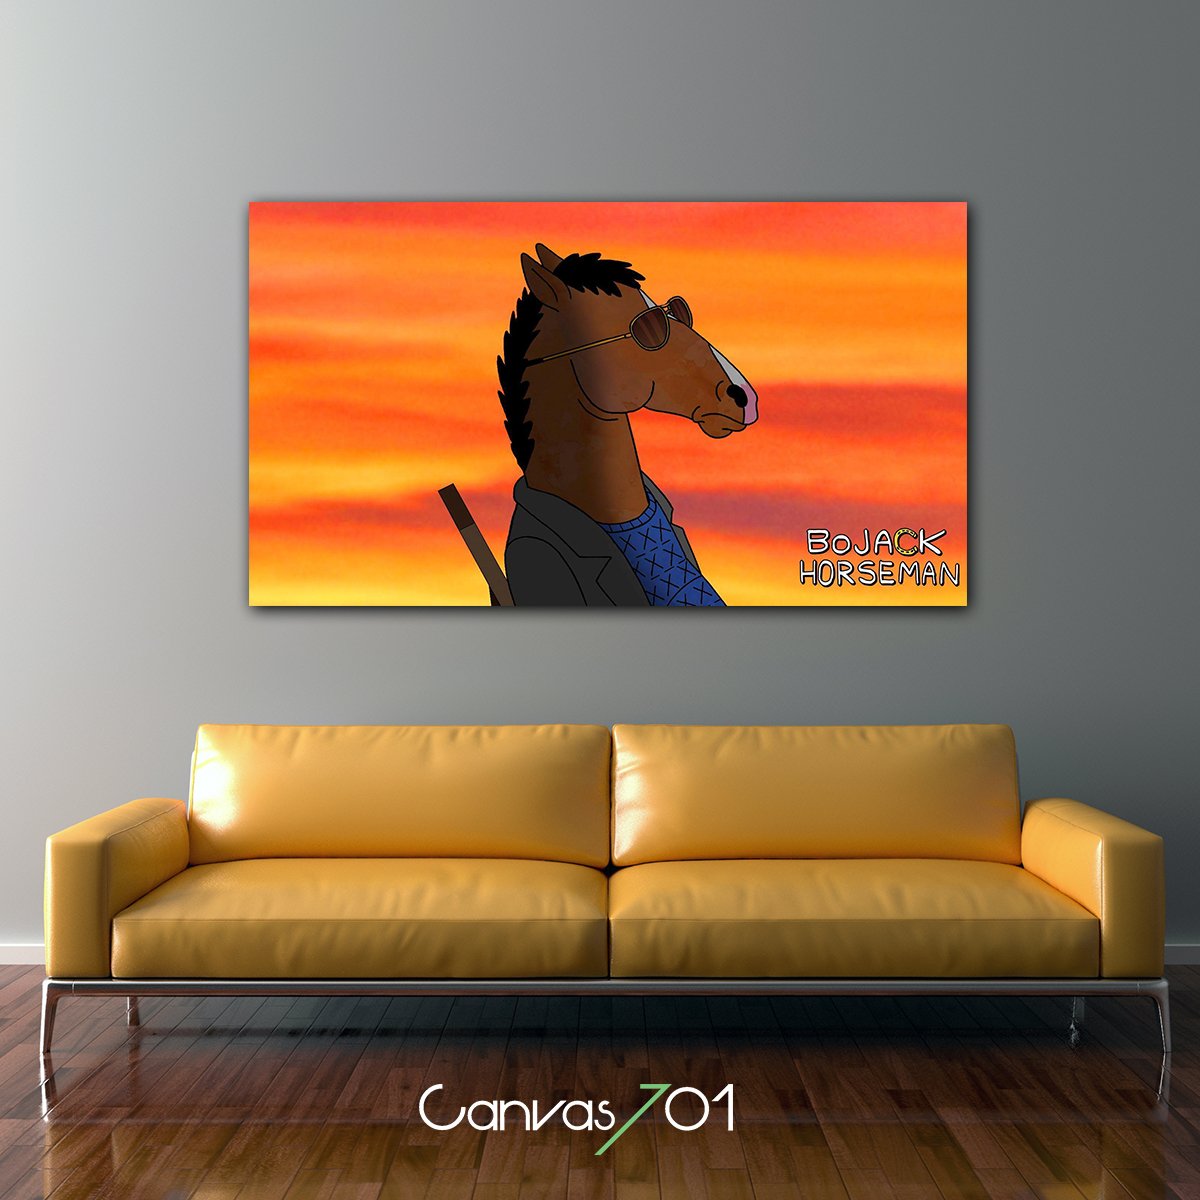 Canvas701 | Bojack Horseman Kanvas Tablo